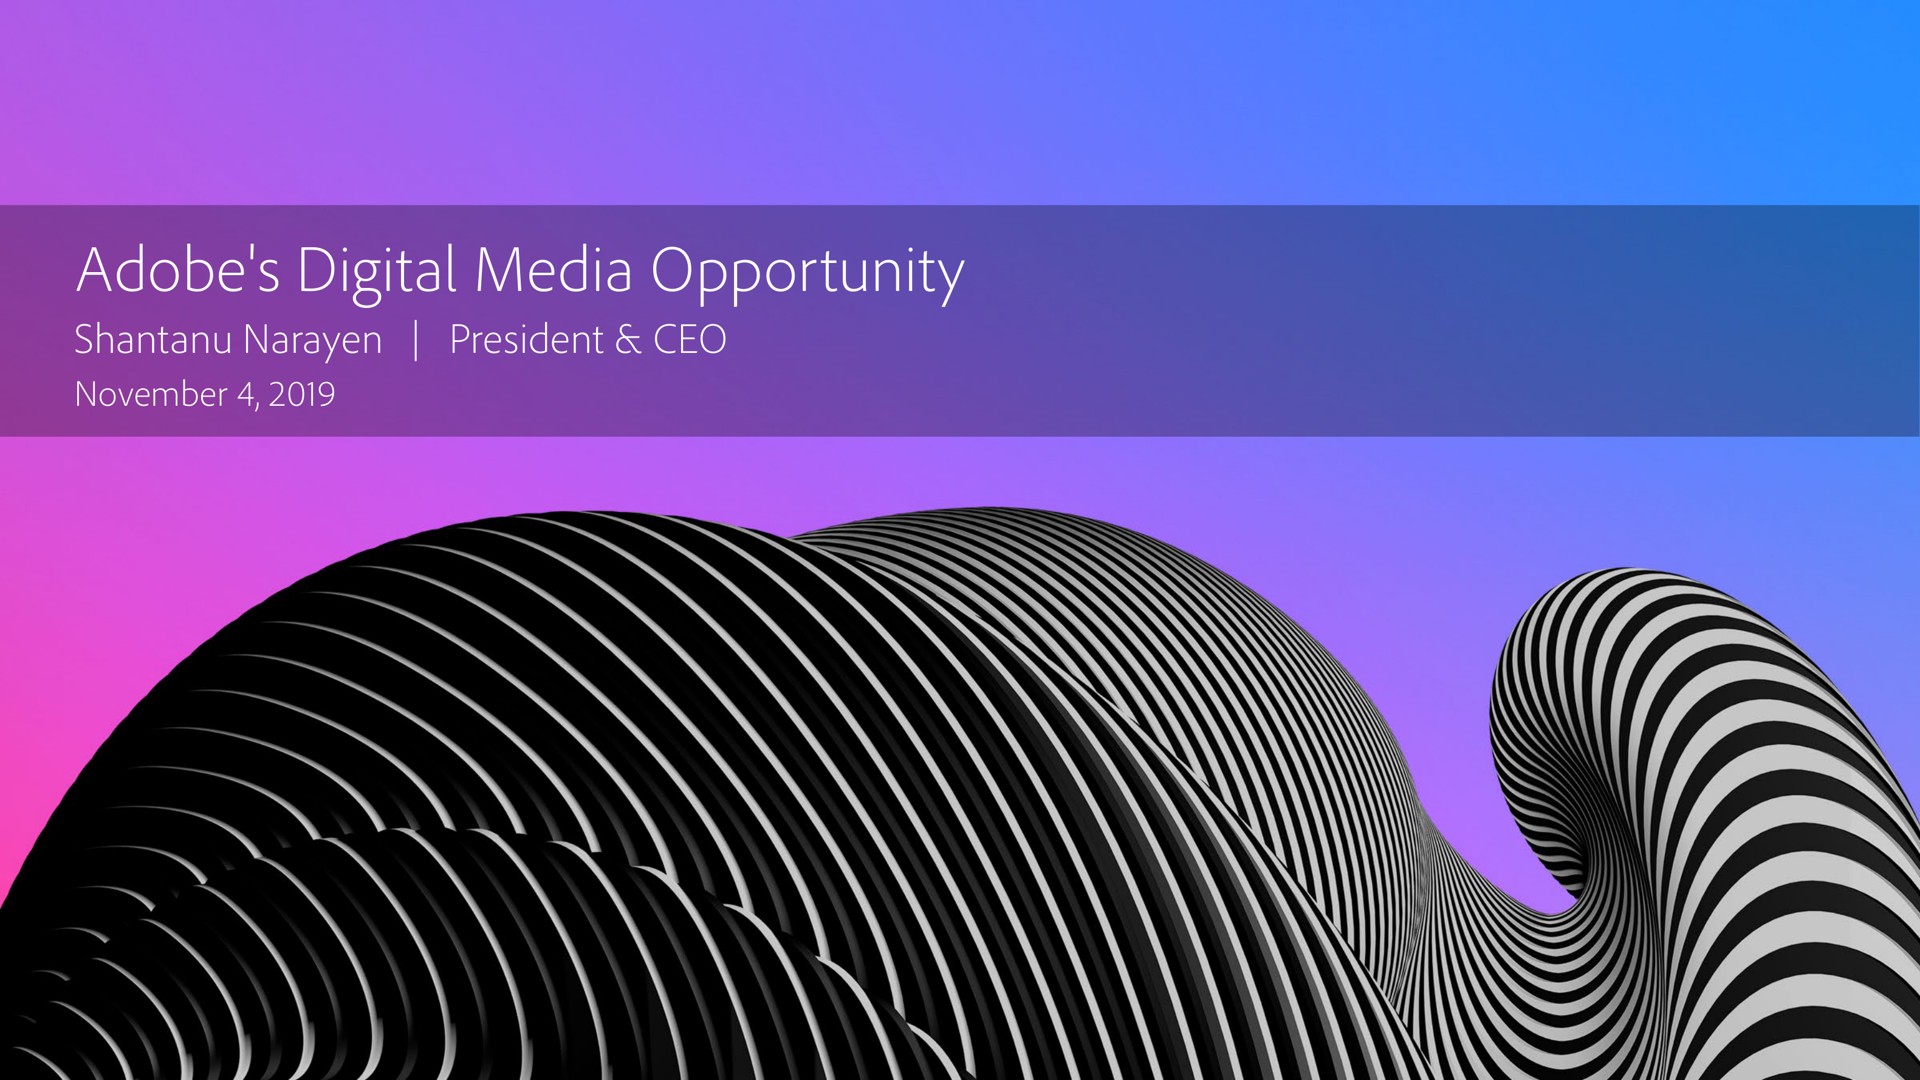 adobe digital media opportunity | Adobe